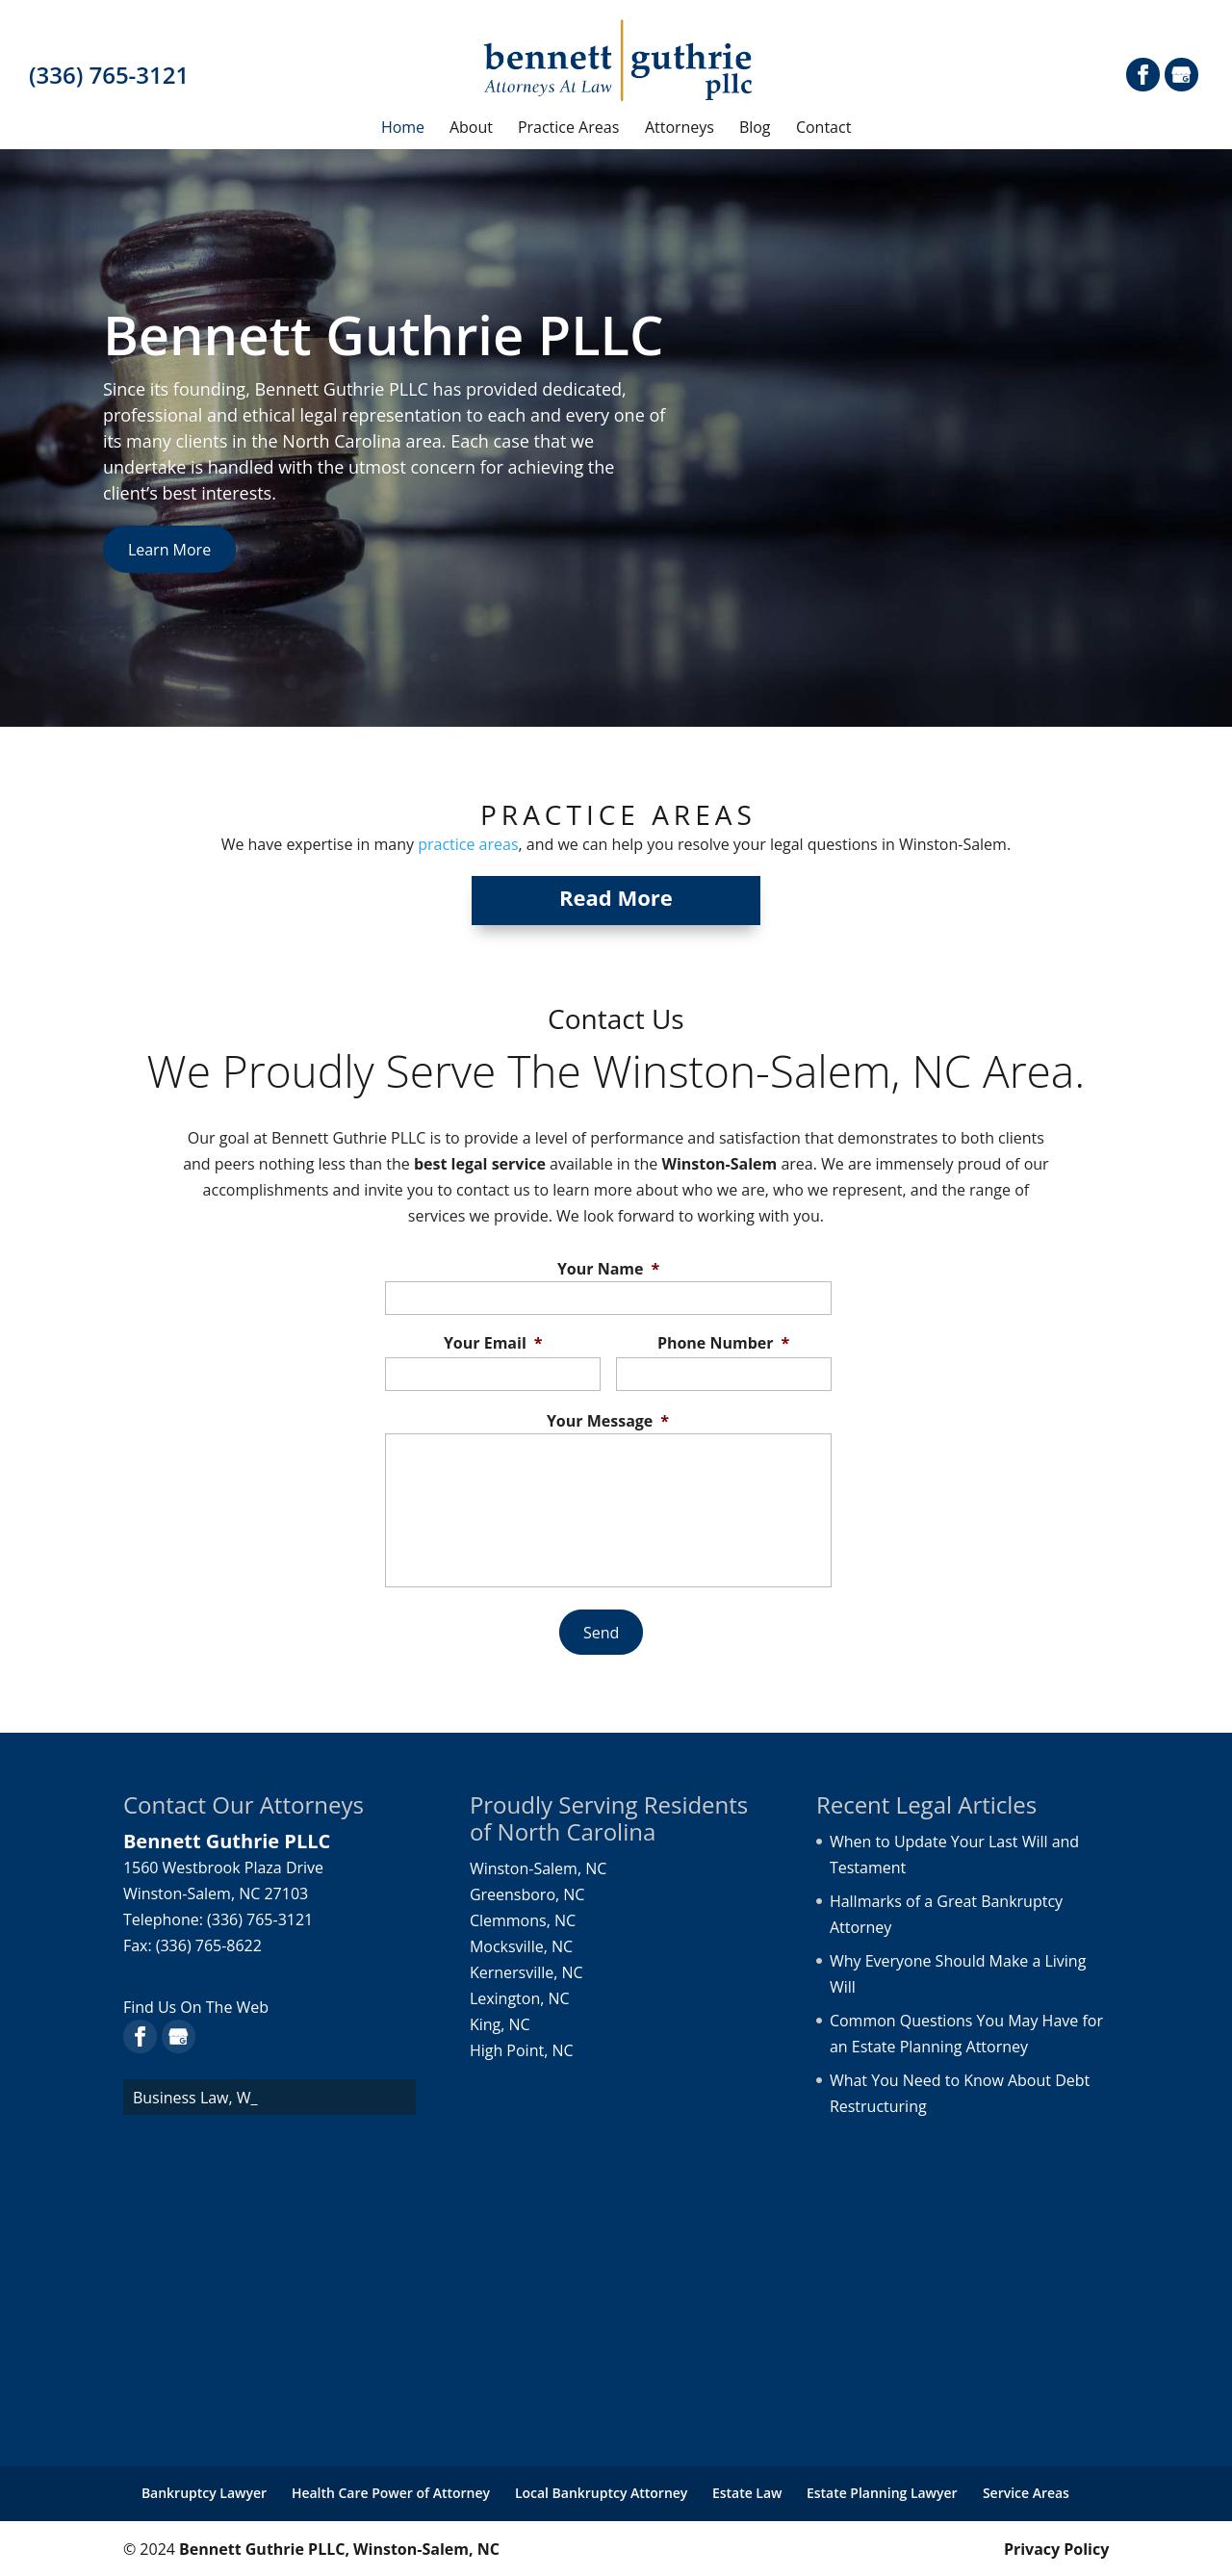 Bennett & Guthrie PLLC - Winston Salem NC Lawyers